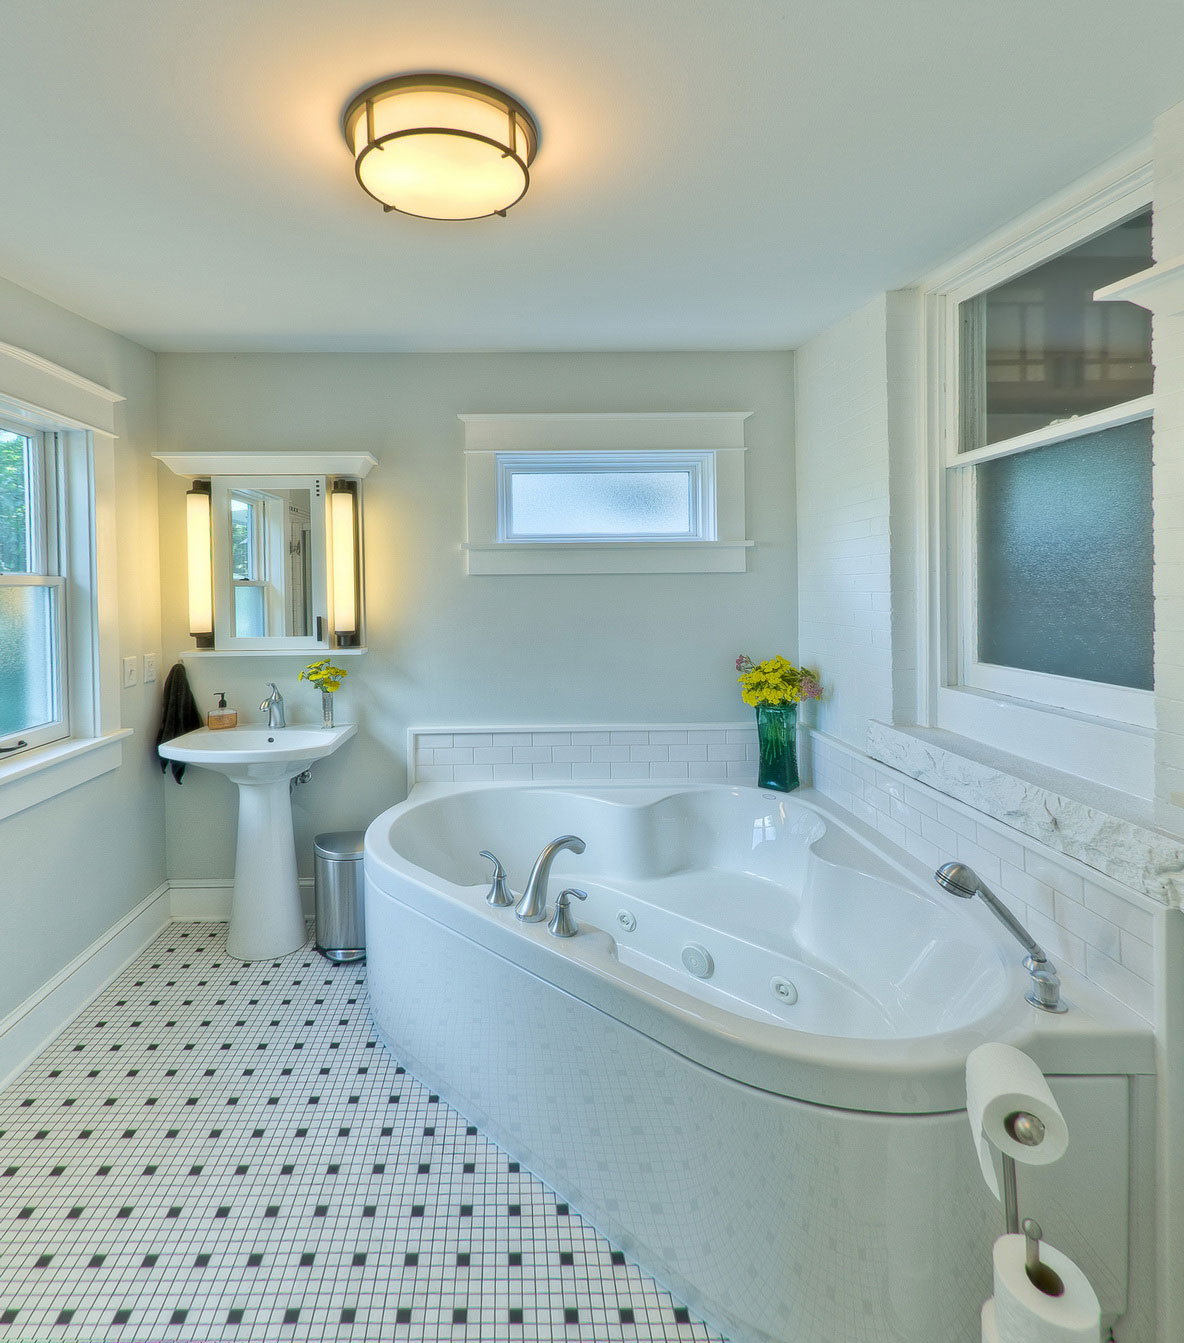 elegance-minimalist-Luxury-bathroom-design-ideas-corner-oval-white-sauna-whirlpool-bathtub-white-acrylic-pedestal-sink-white-wooden-frame-mirrored-front-medicine-cabinet-cylindrical-wall